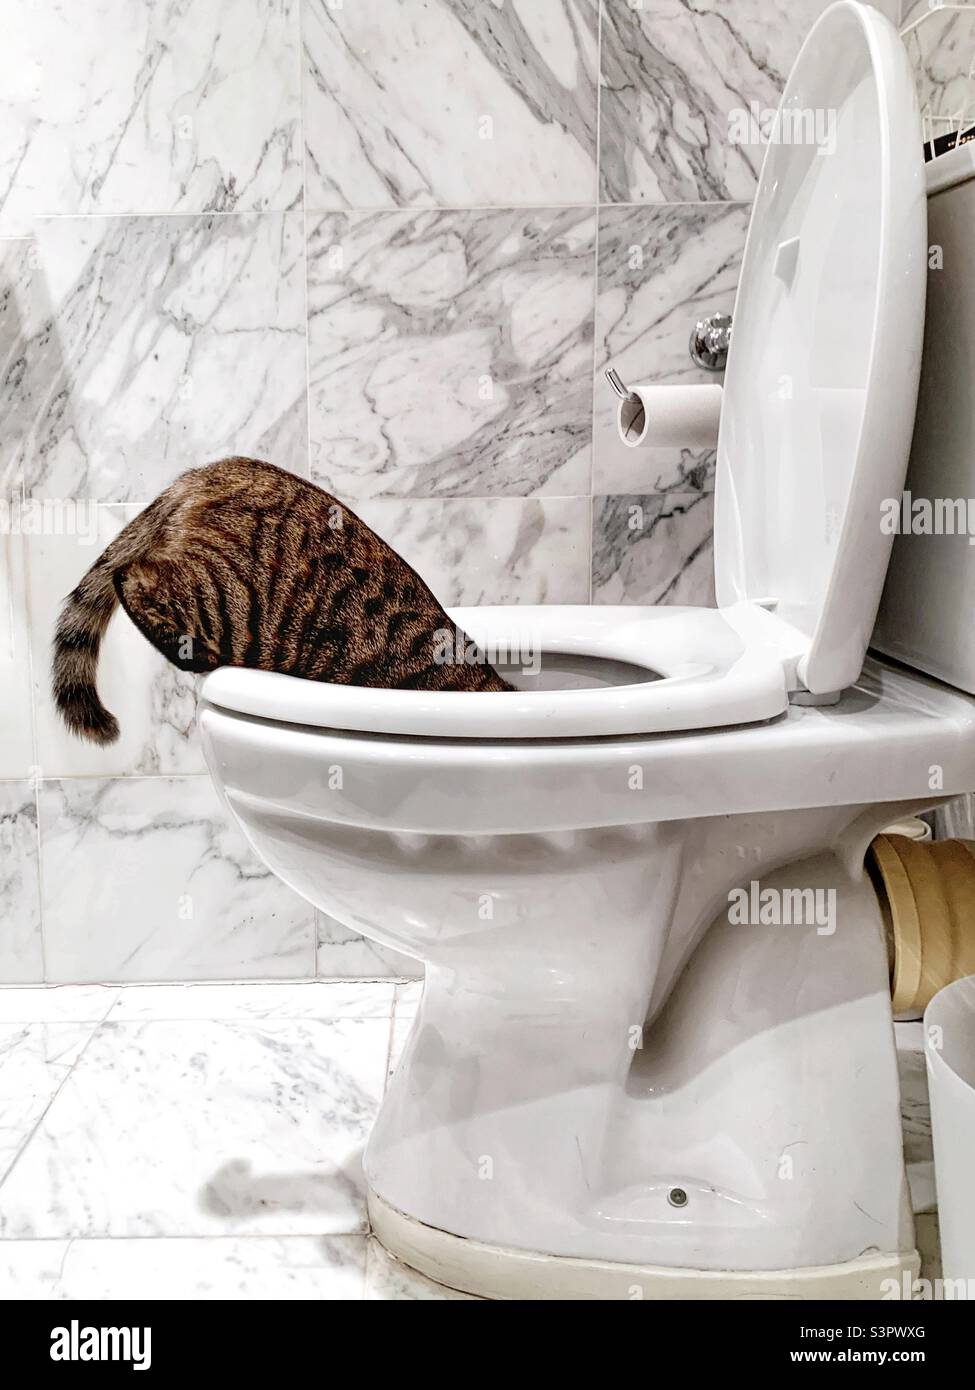 Cat drinking from toilet bowl, London, UK Stock Photo - Alamy